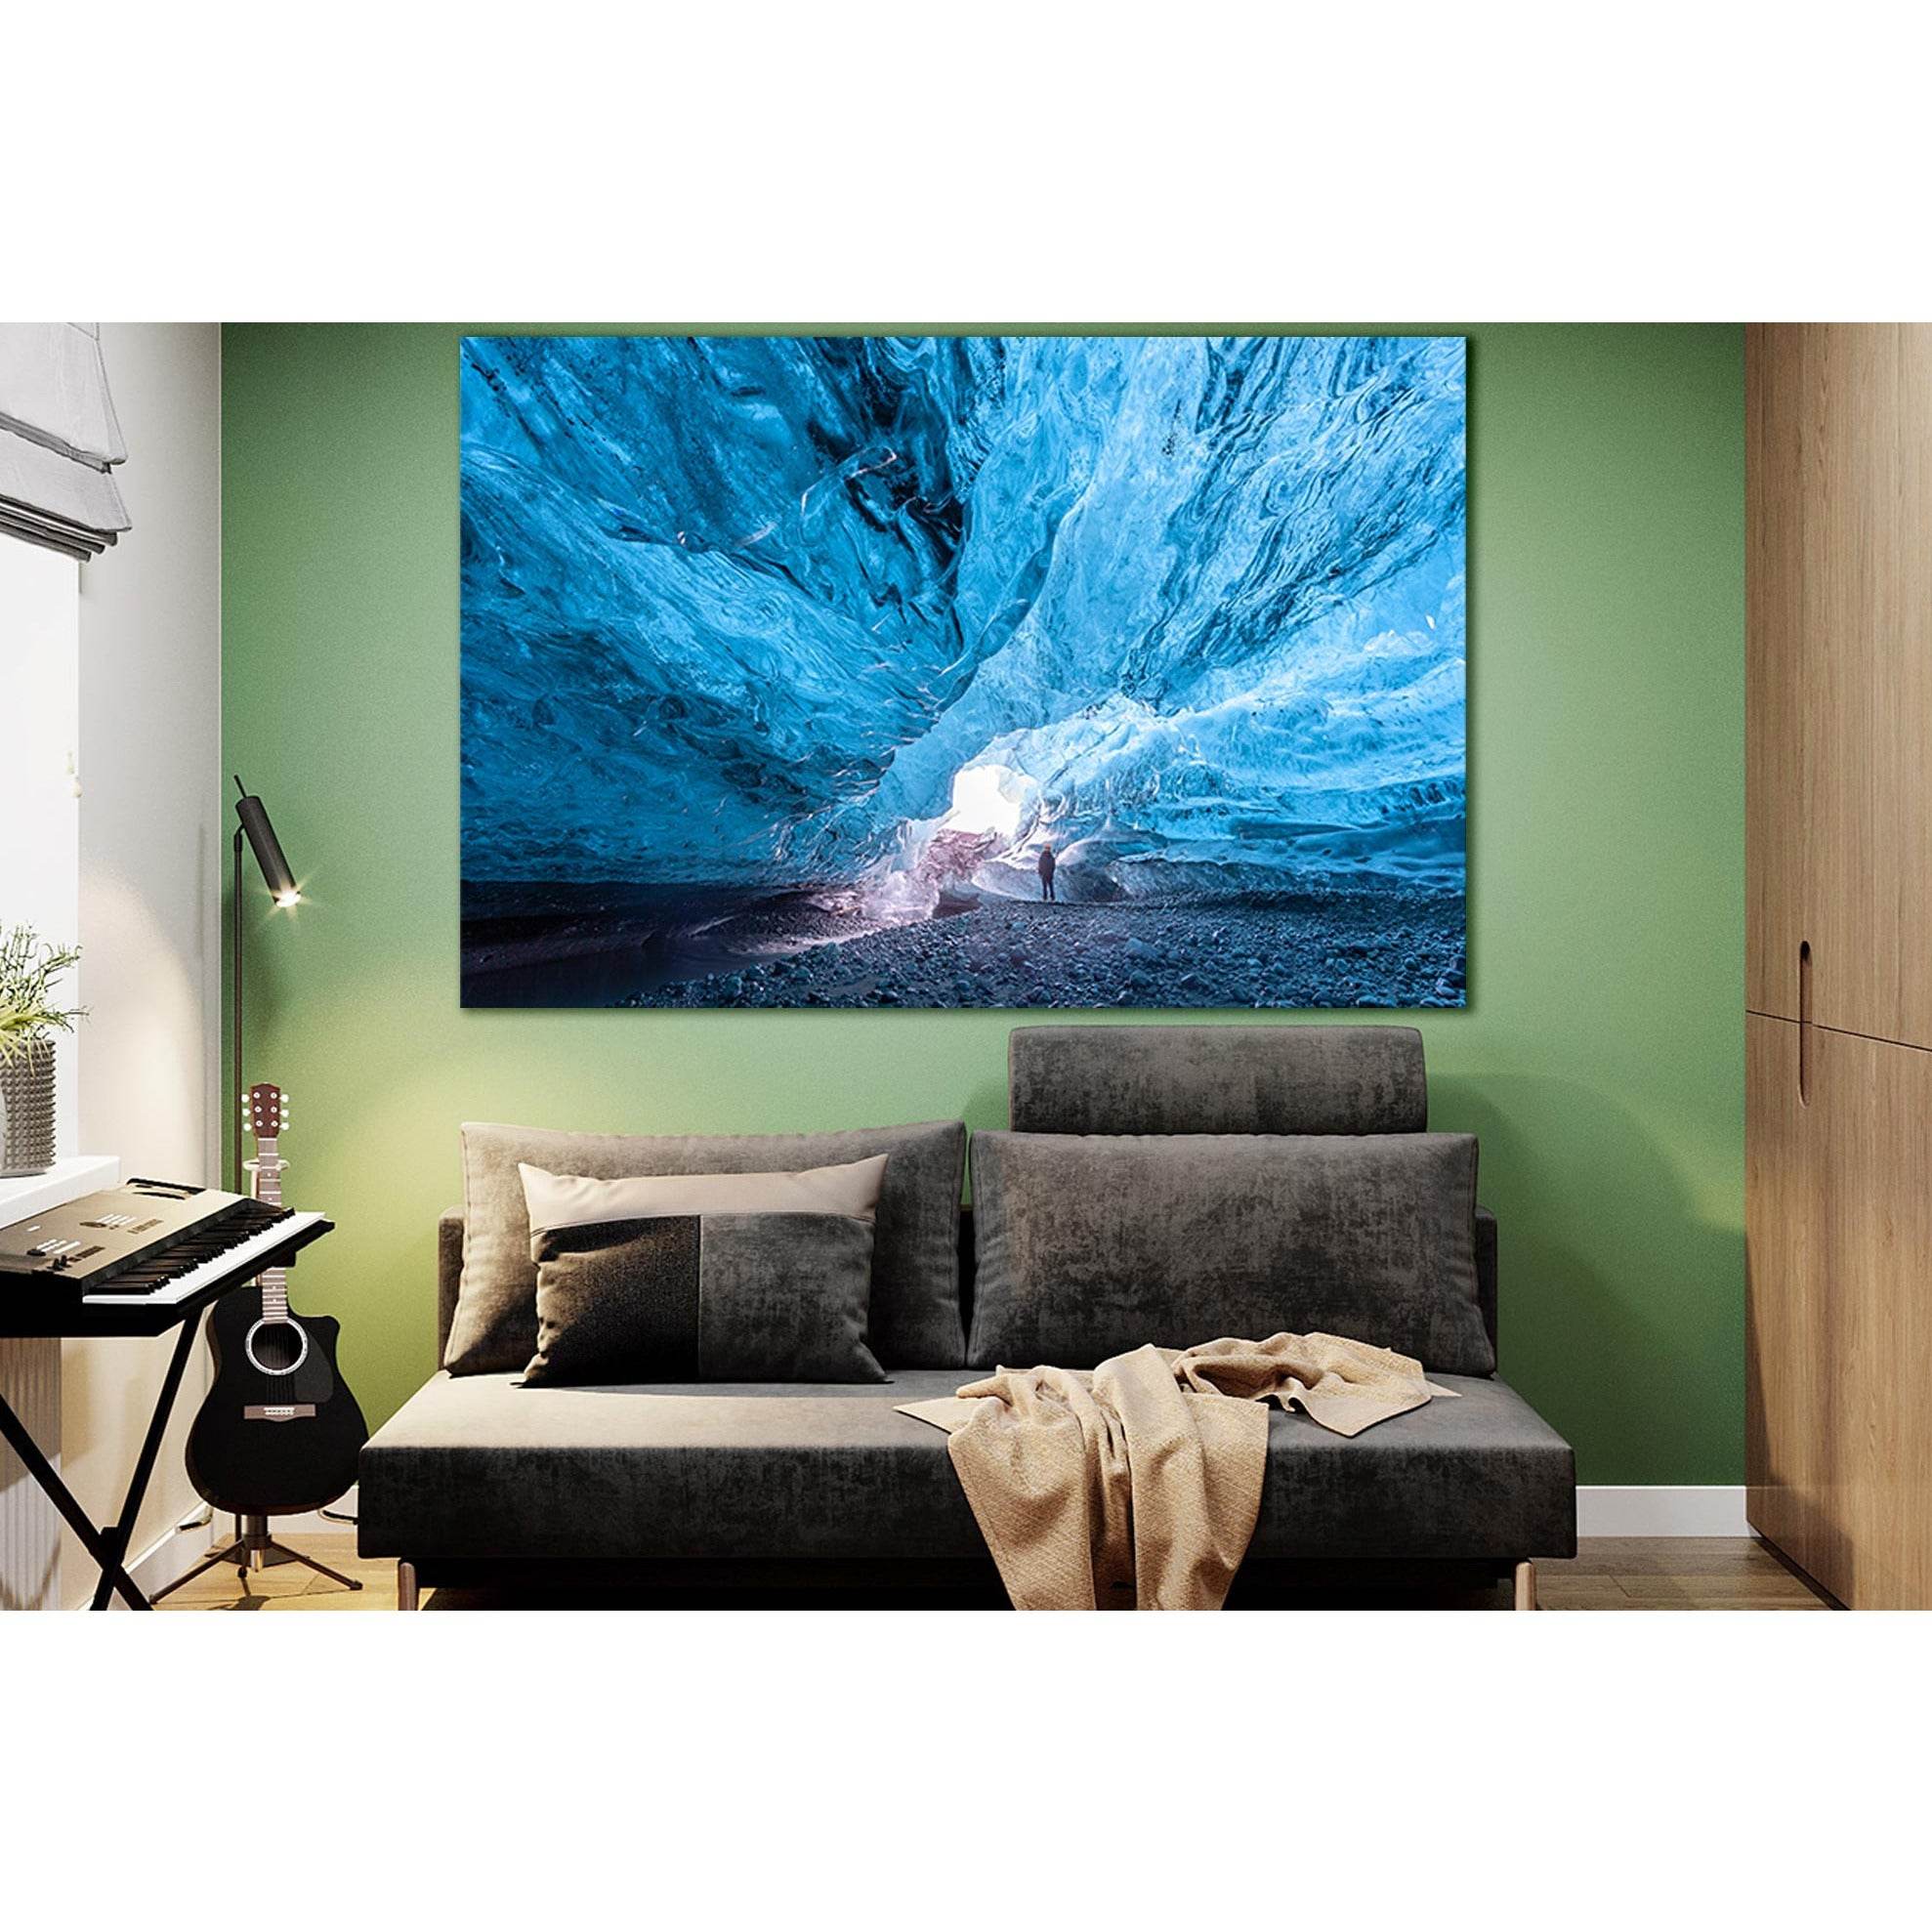 Vatnajökull Glacier Iceland №SL1315 Ready to Hang Canvas Print